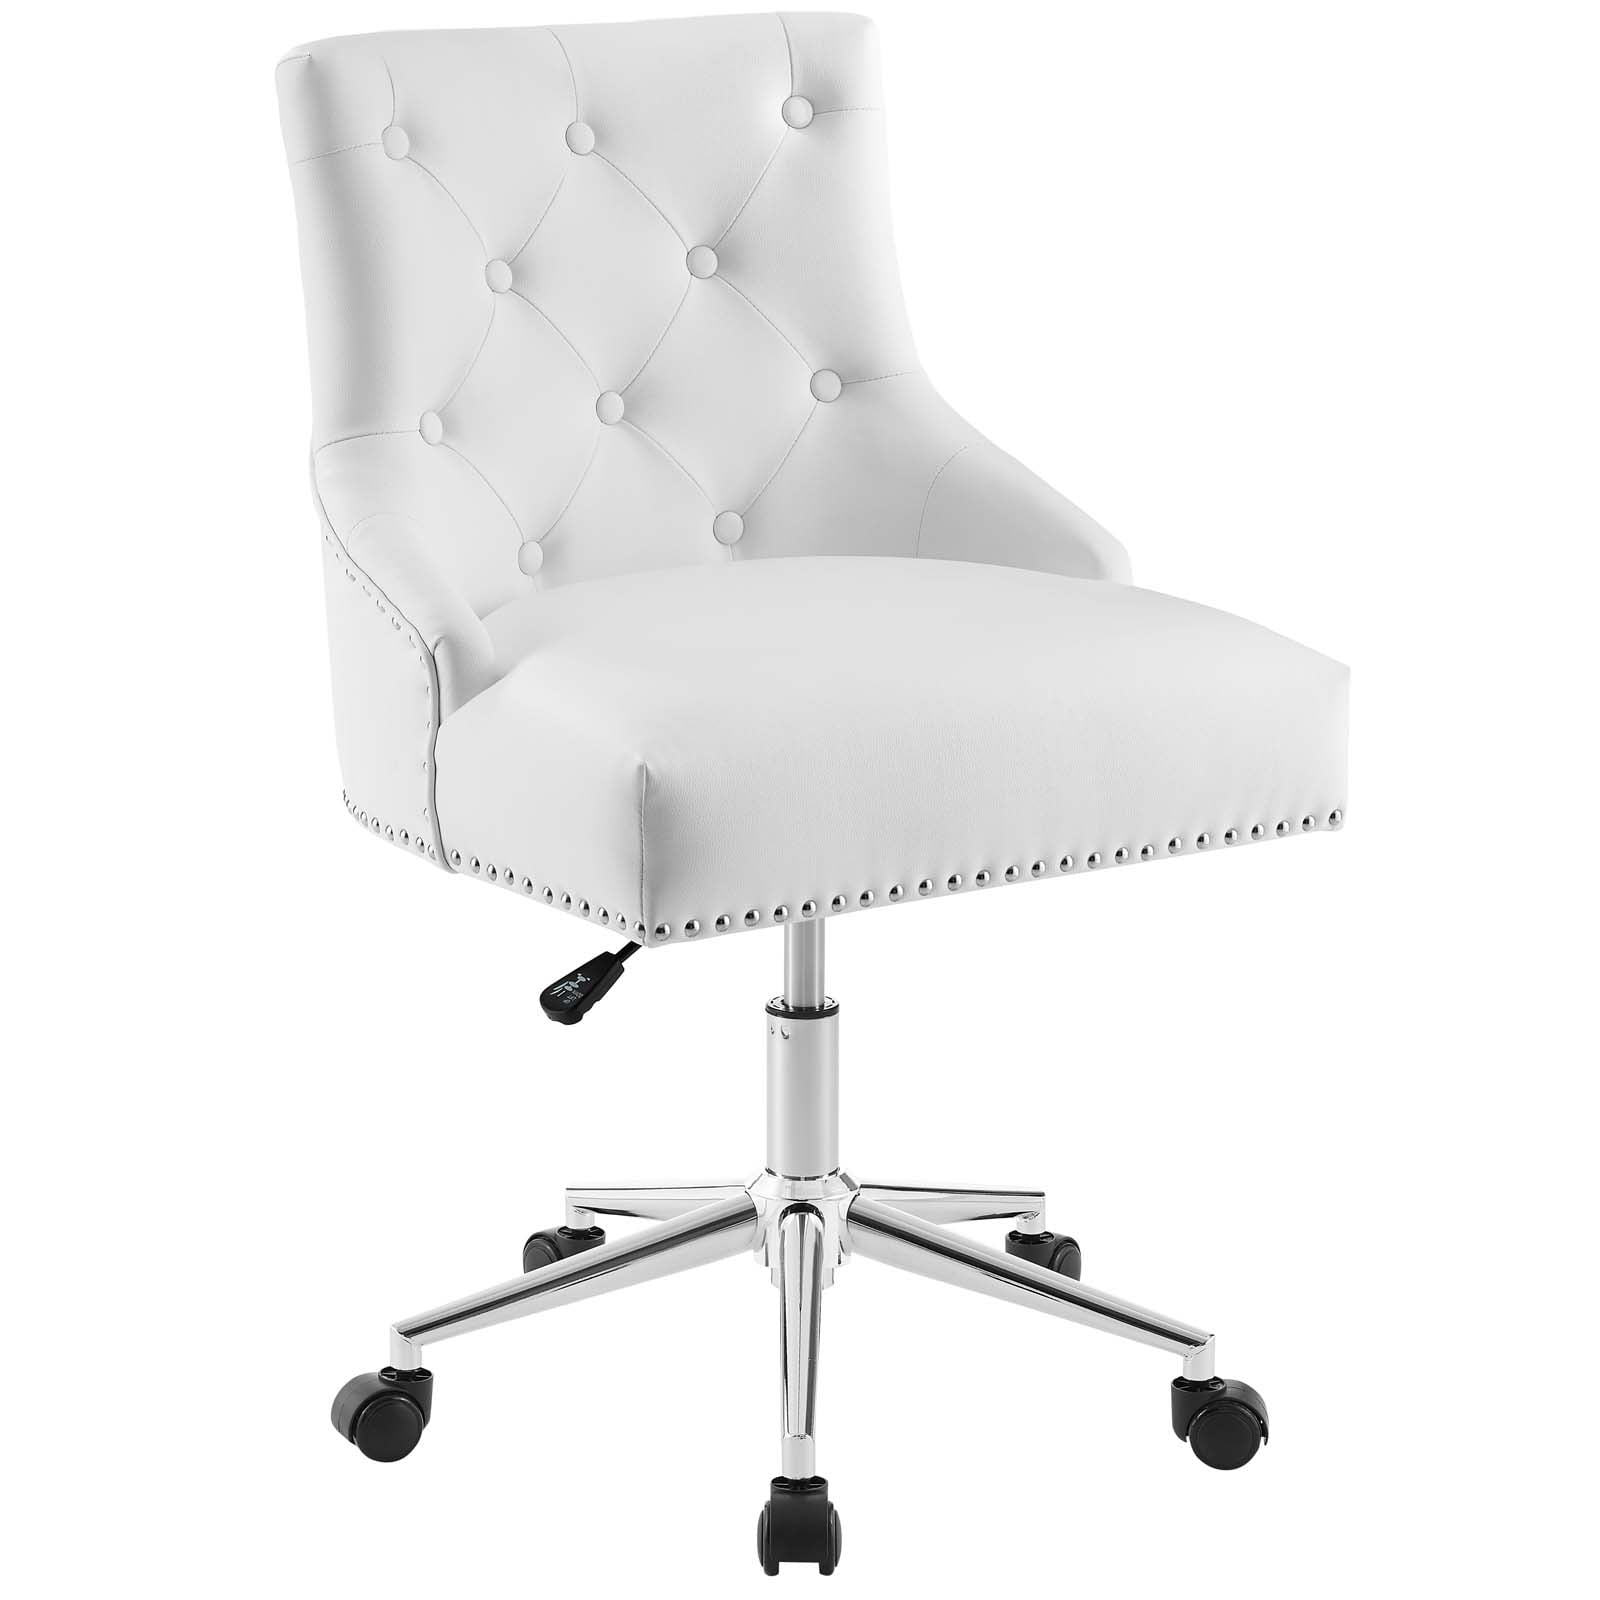 Modern Faux Leather Office Chair Beige Metal Base Adjustable Castors Elect